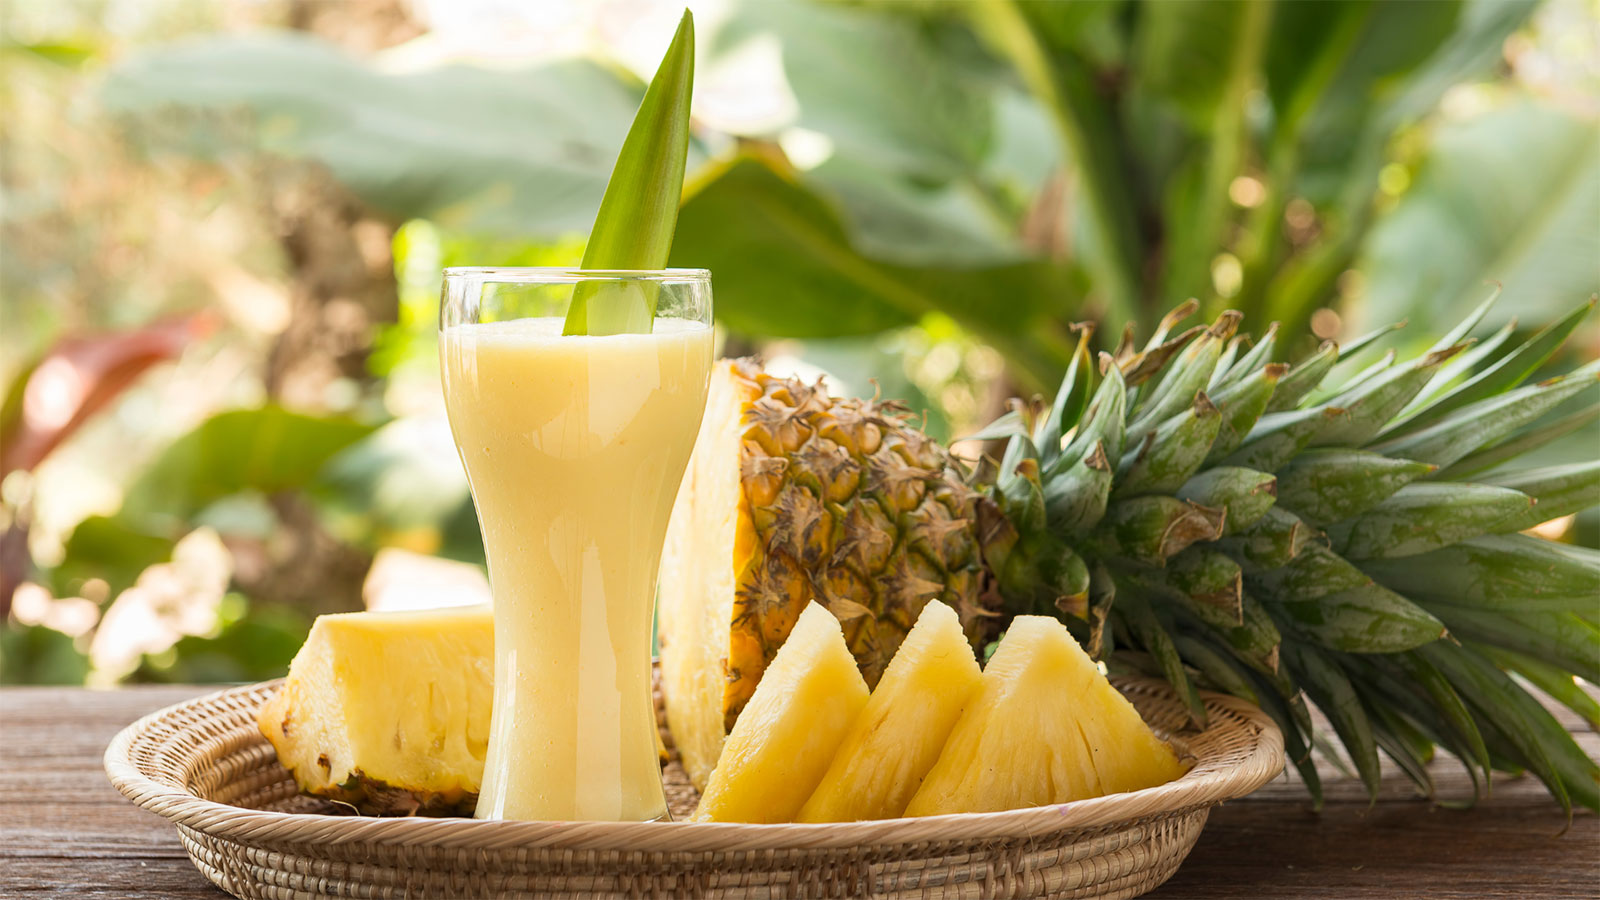 Amazing drinks with pineapple juice